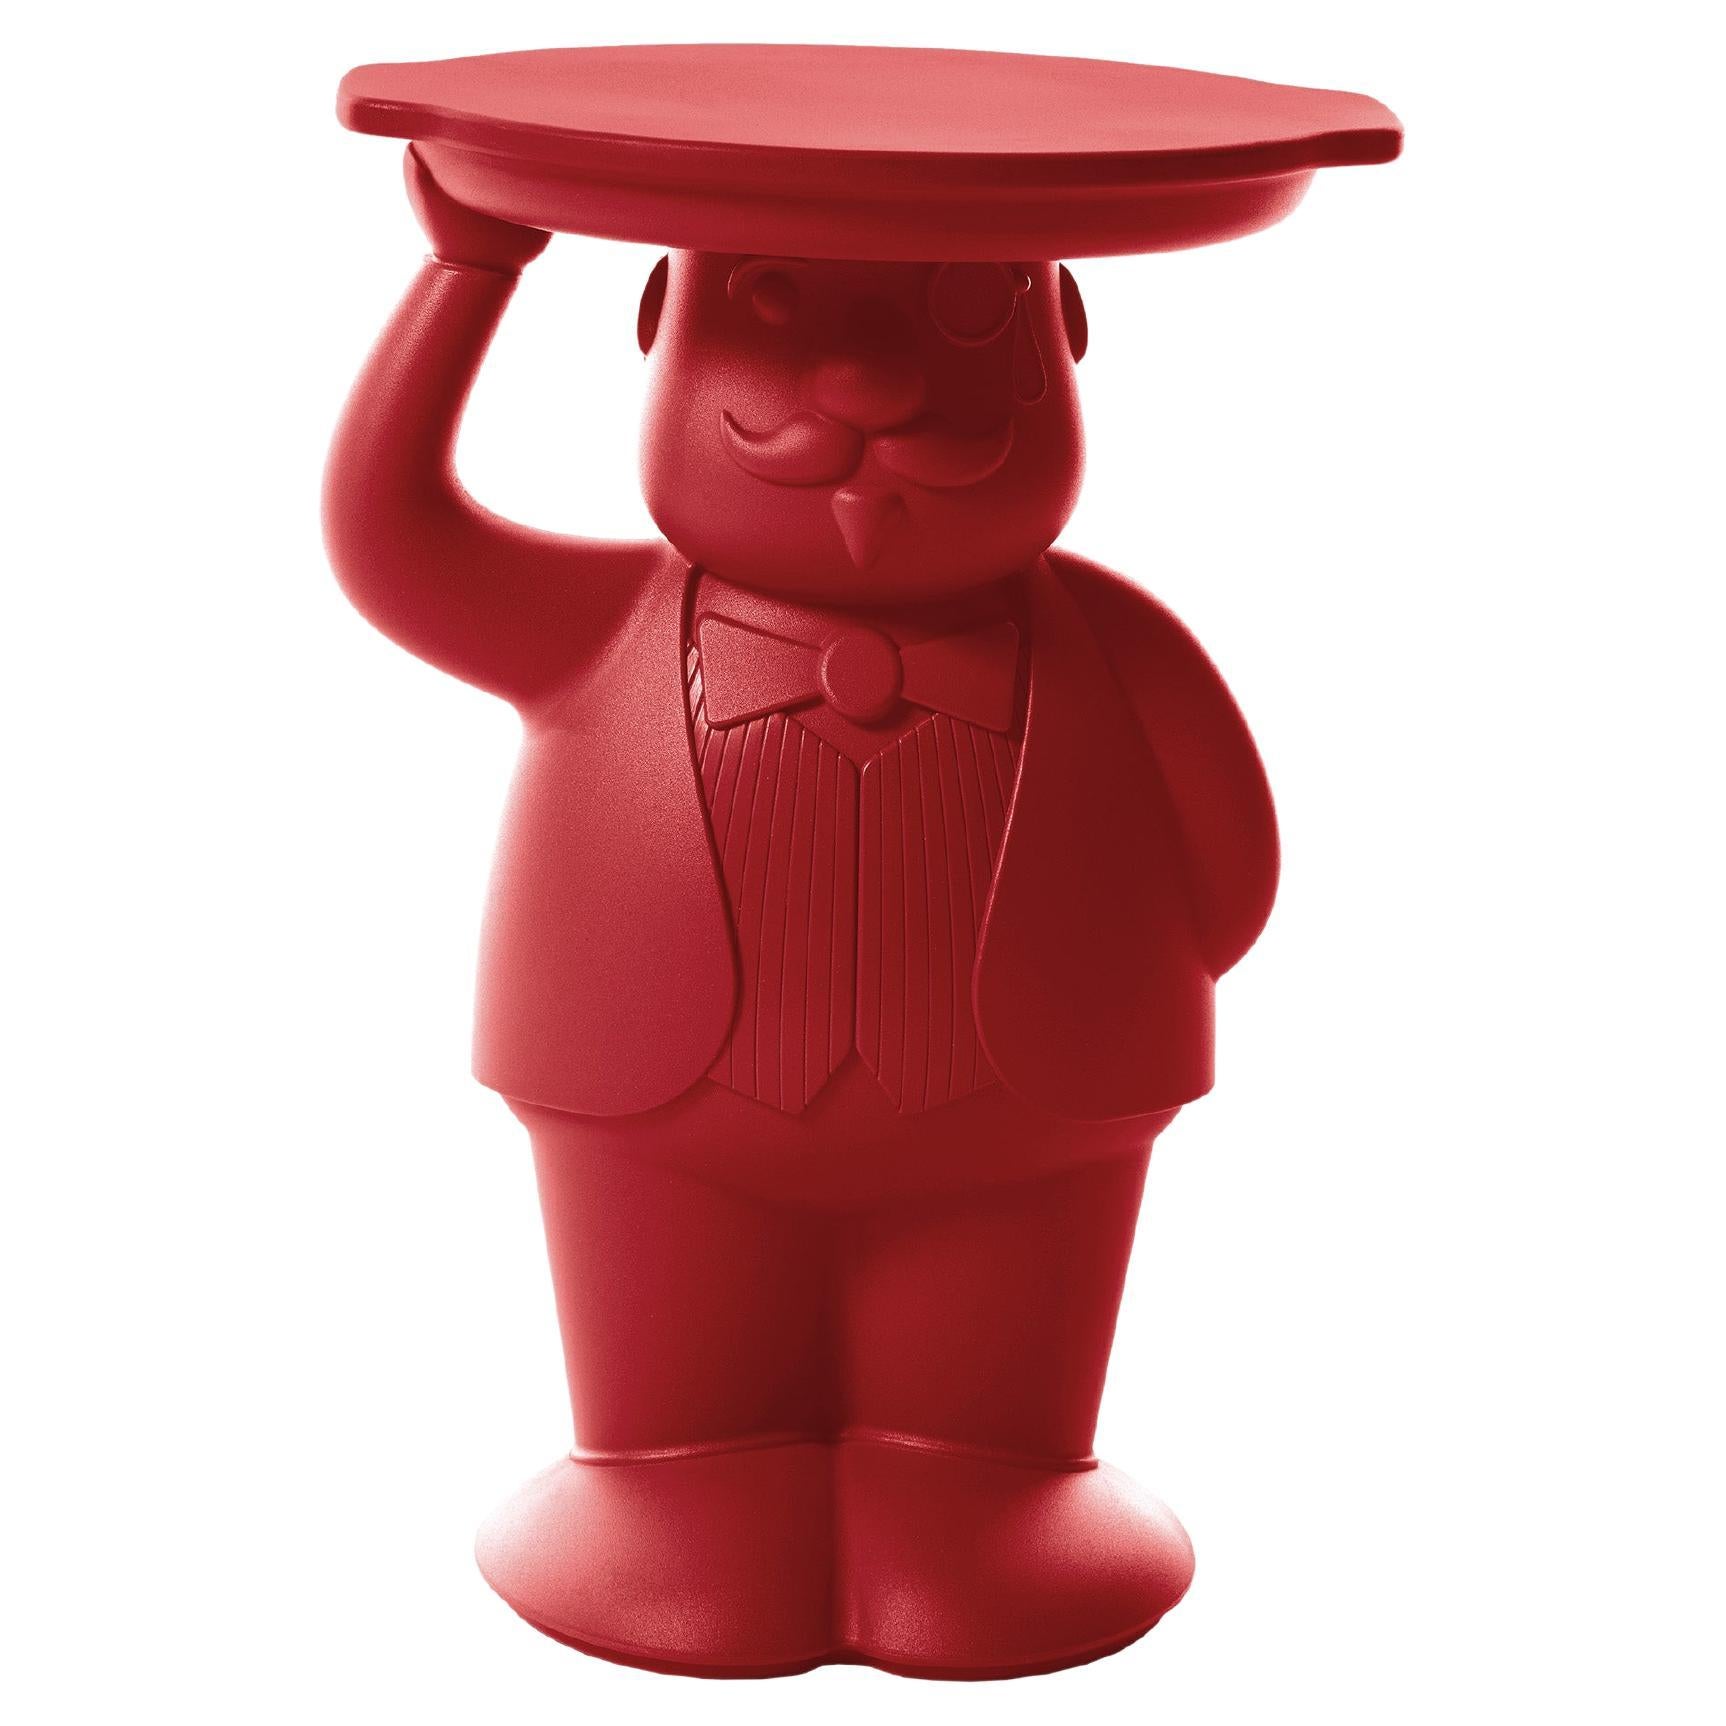 Table de service Ambrogio Slide Design rouge flamme de Favaretto & Partner